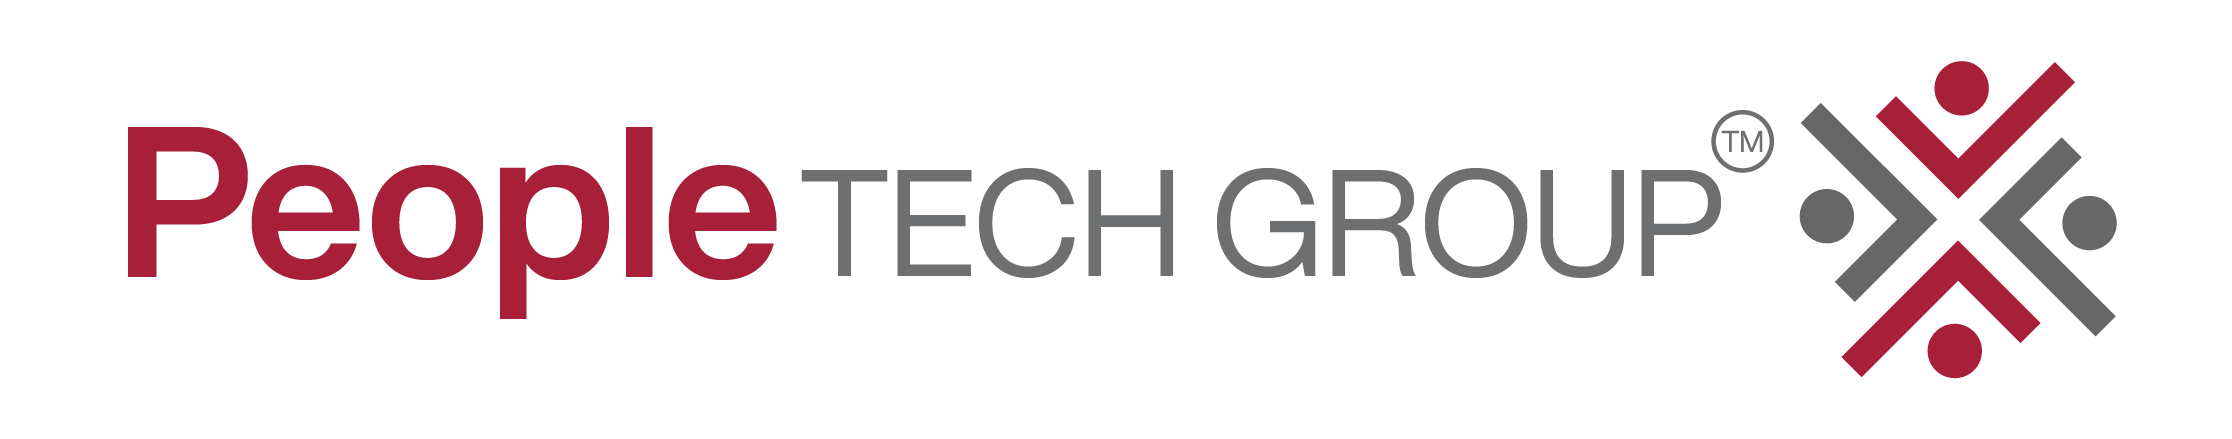 People Tech Group, Inc. logo